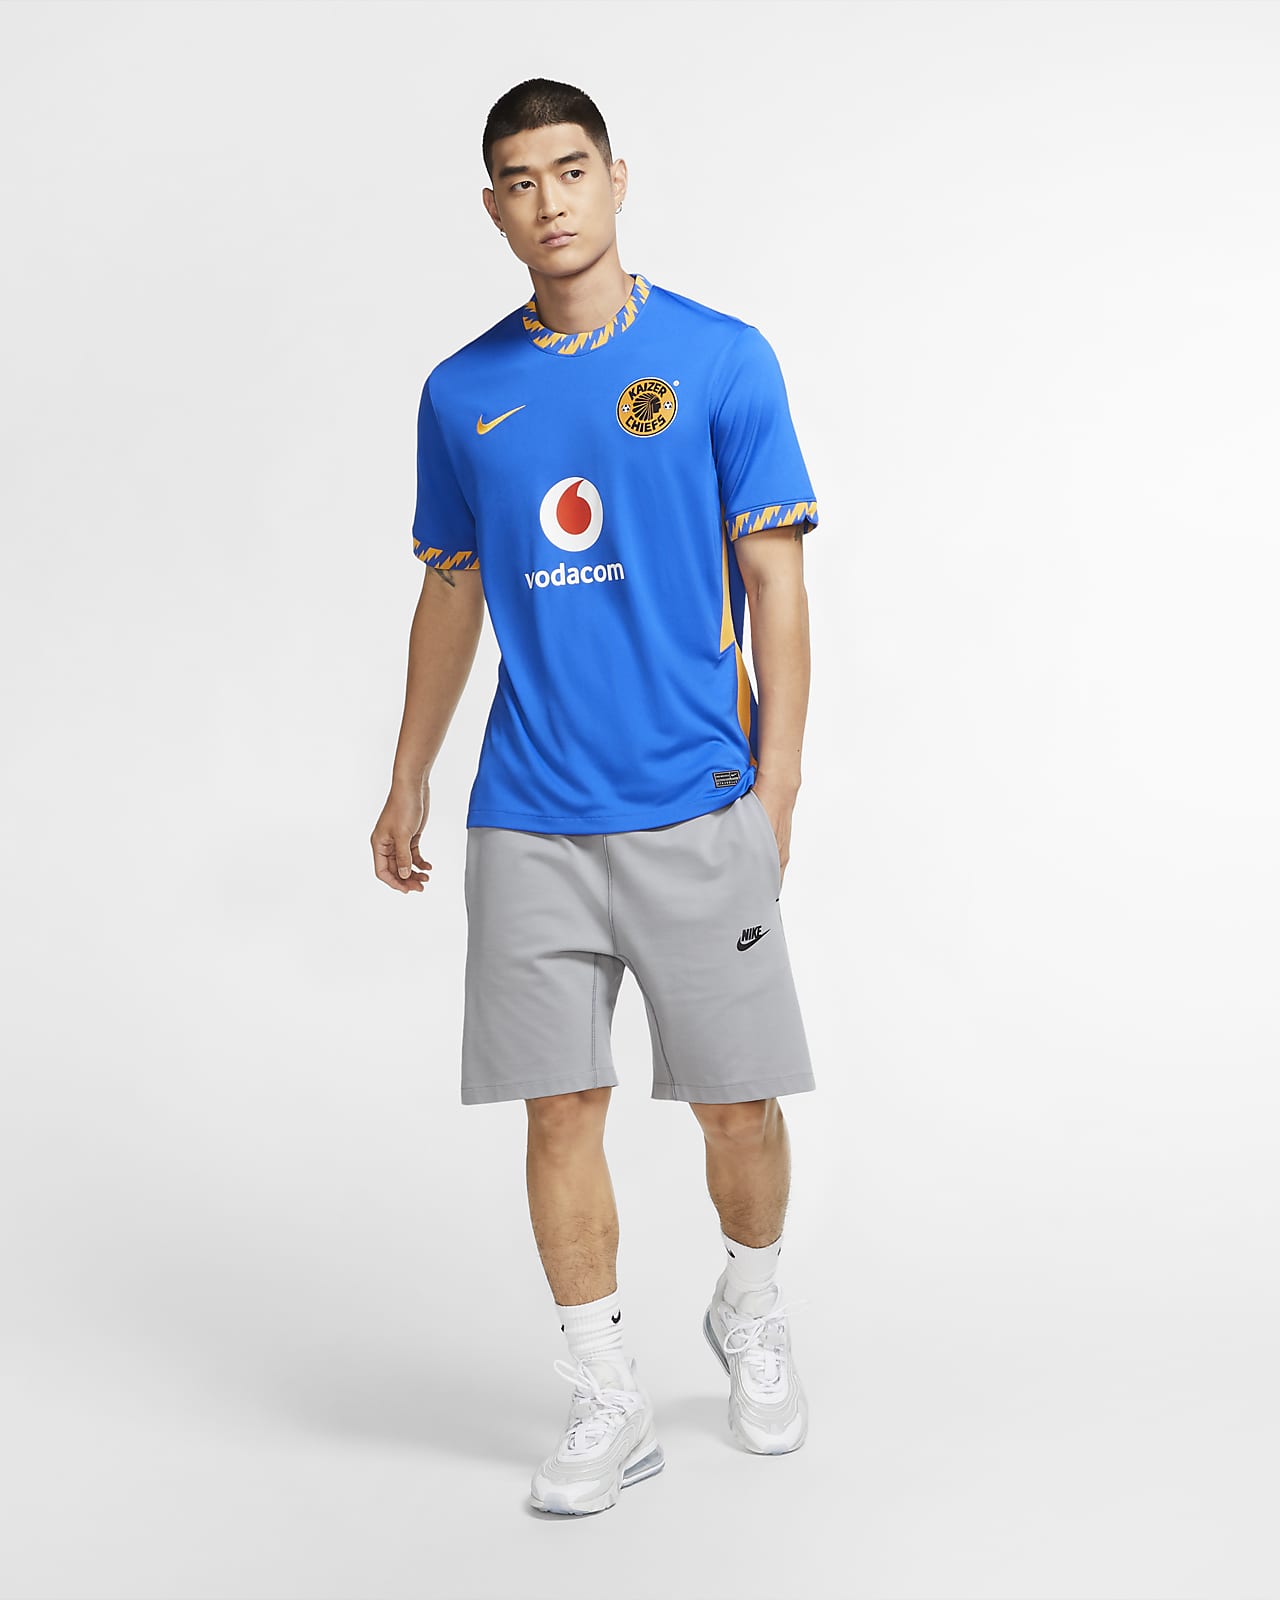 Kaizer Chiefs 2020-21 Nike Away Kit | 20/21 Kits | Football shirt blog